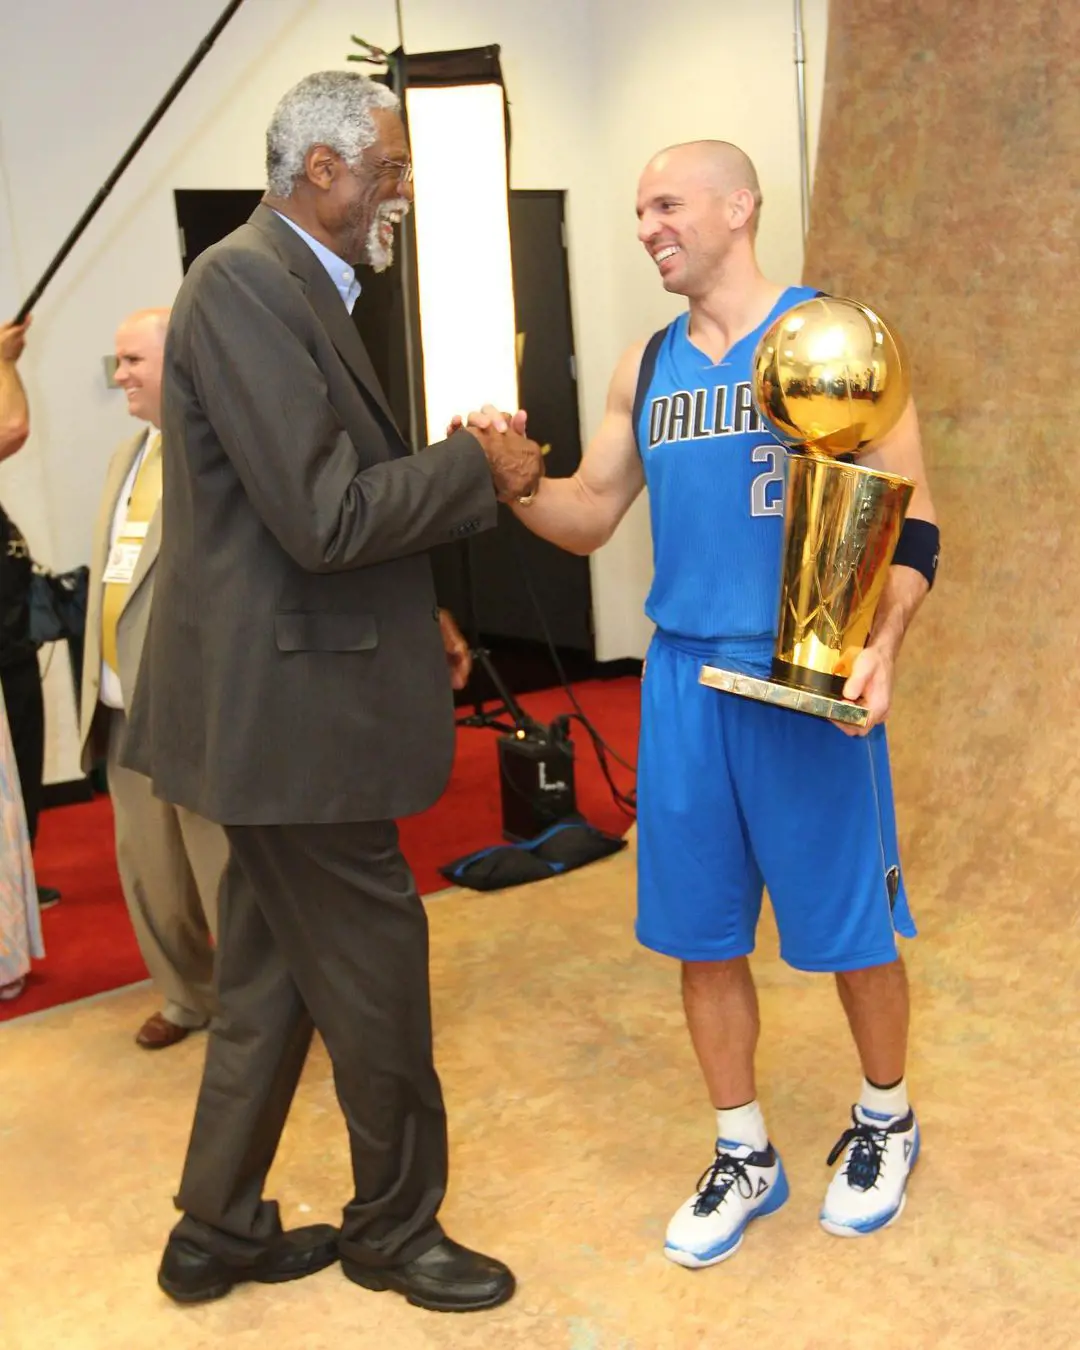 The NBA Championship winner with the Mavericks poses with Wilt Chamberlain